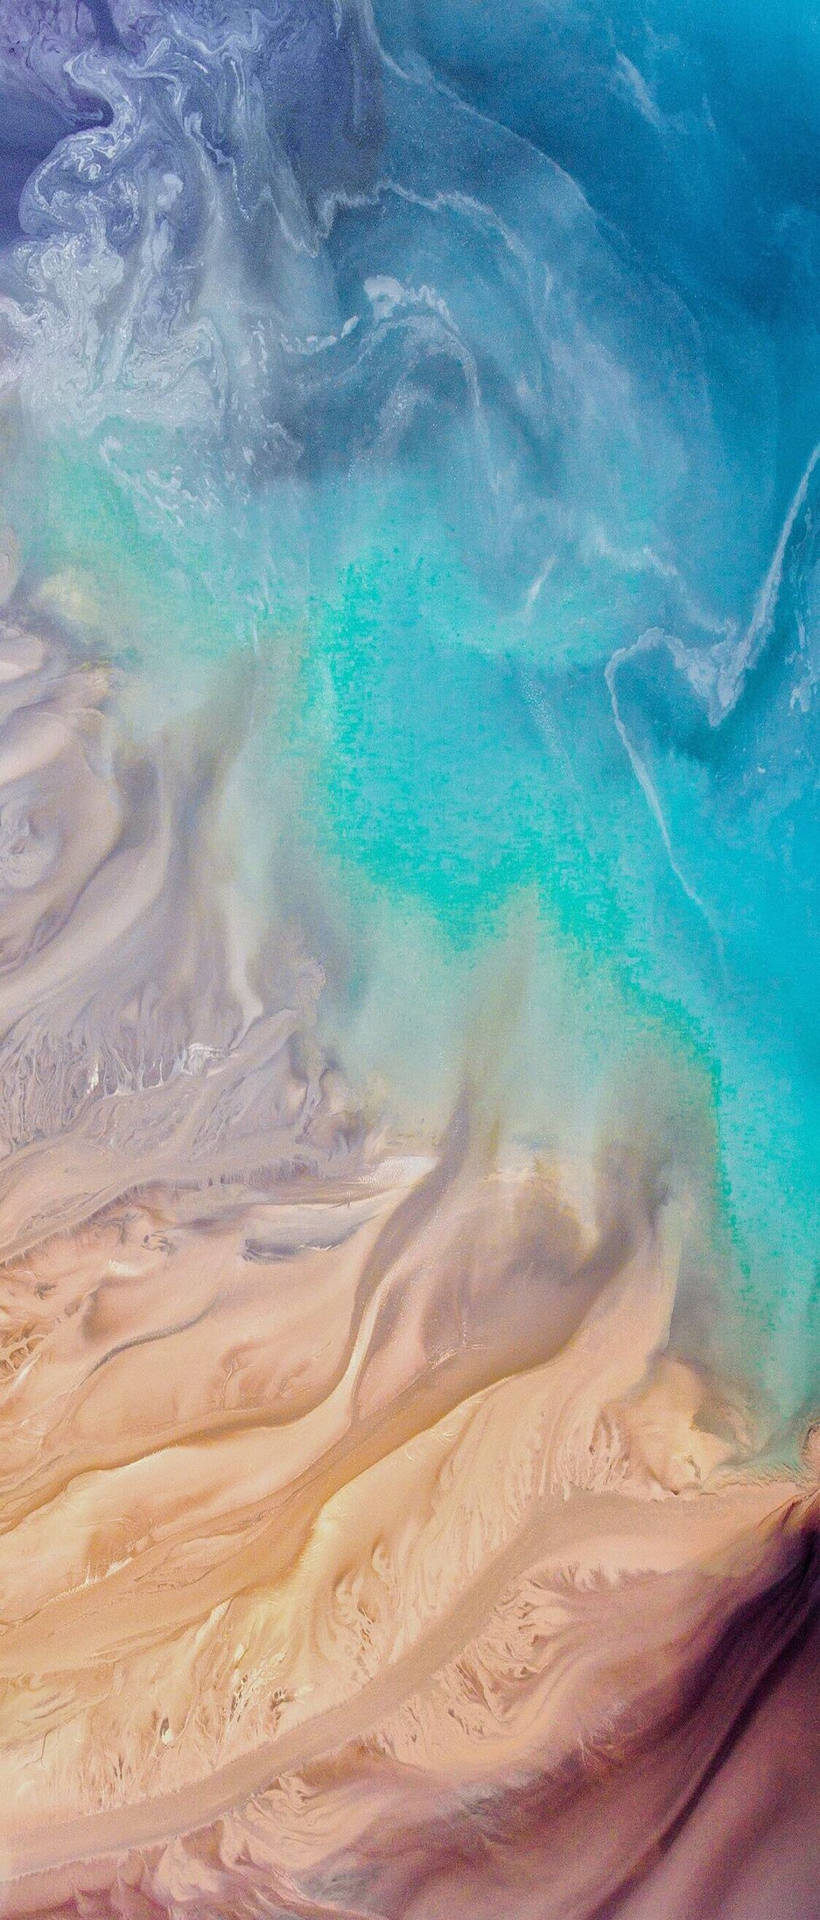 Iphone X Beach Leeching Waves Background